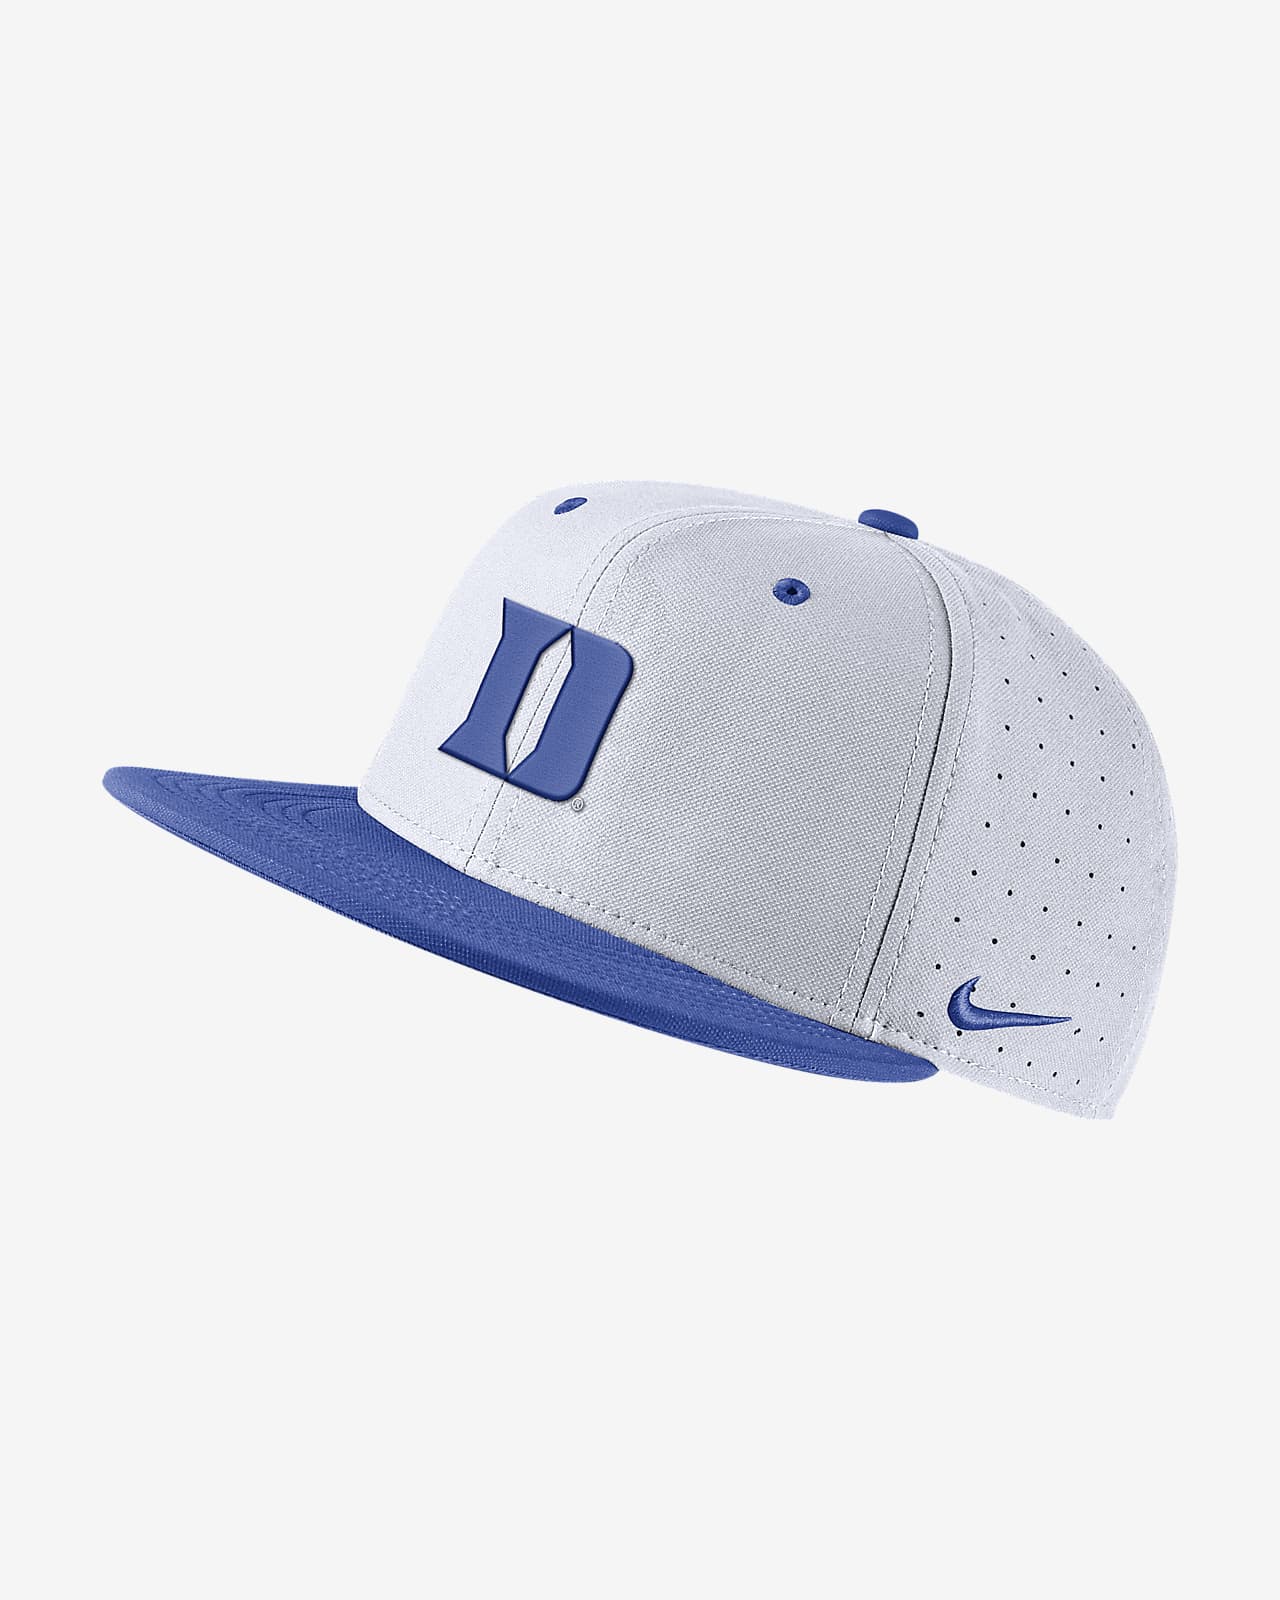 nike college baseball hats